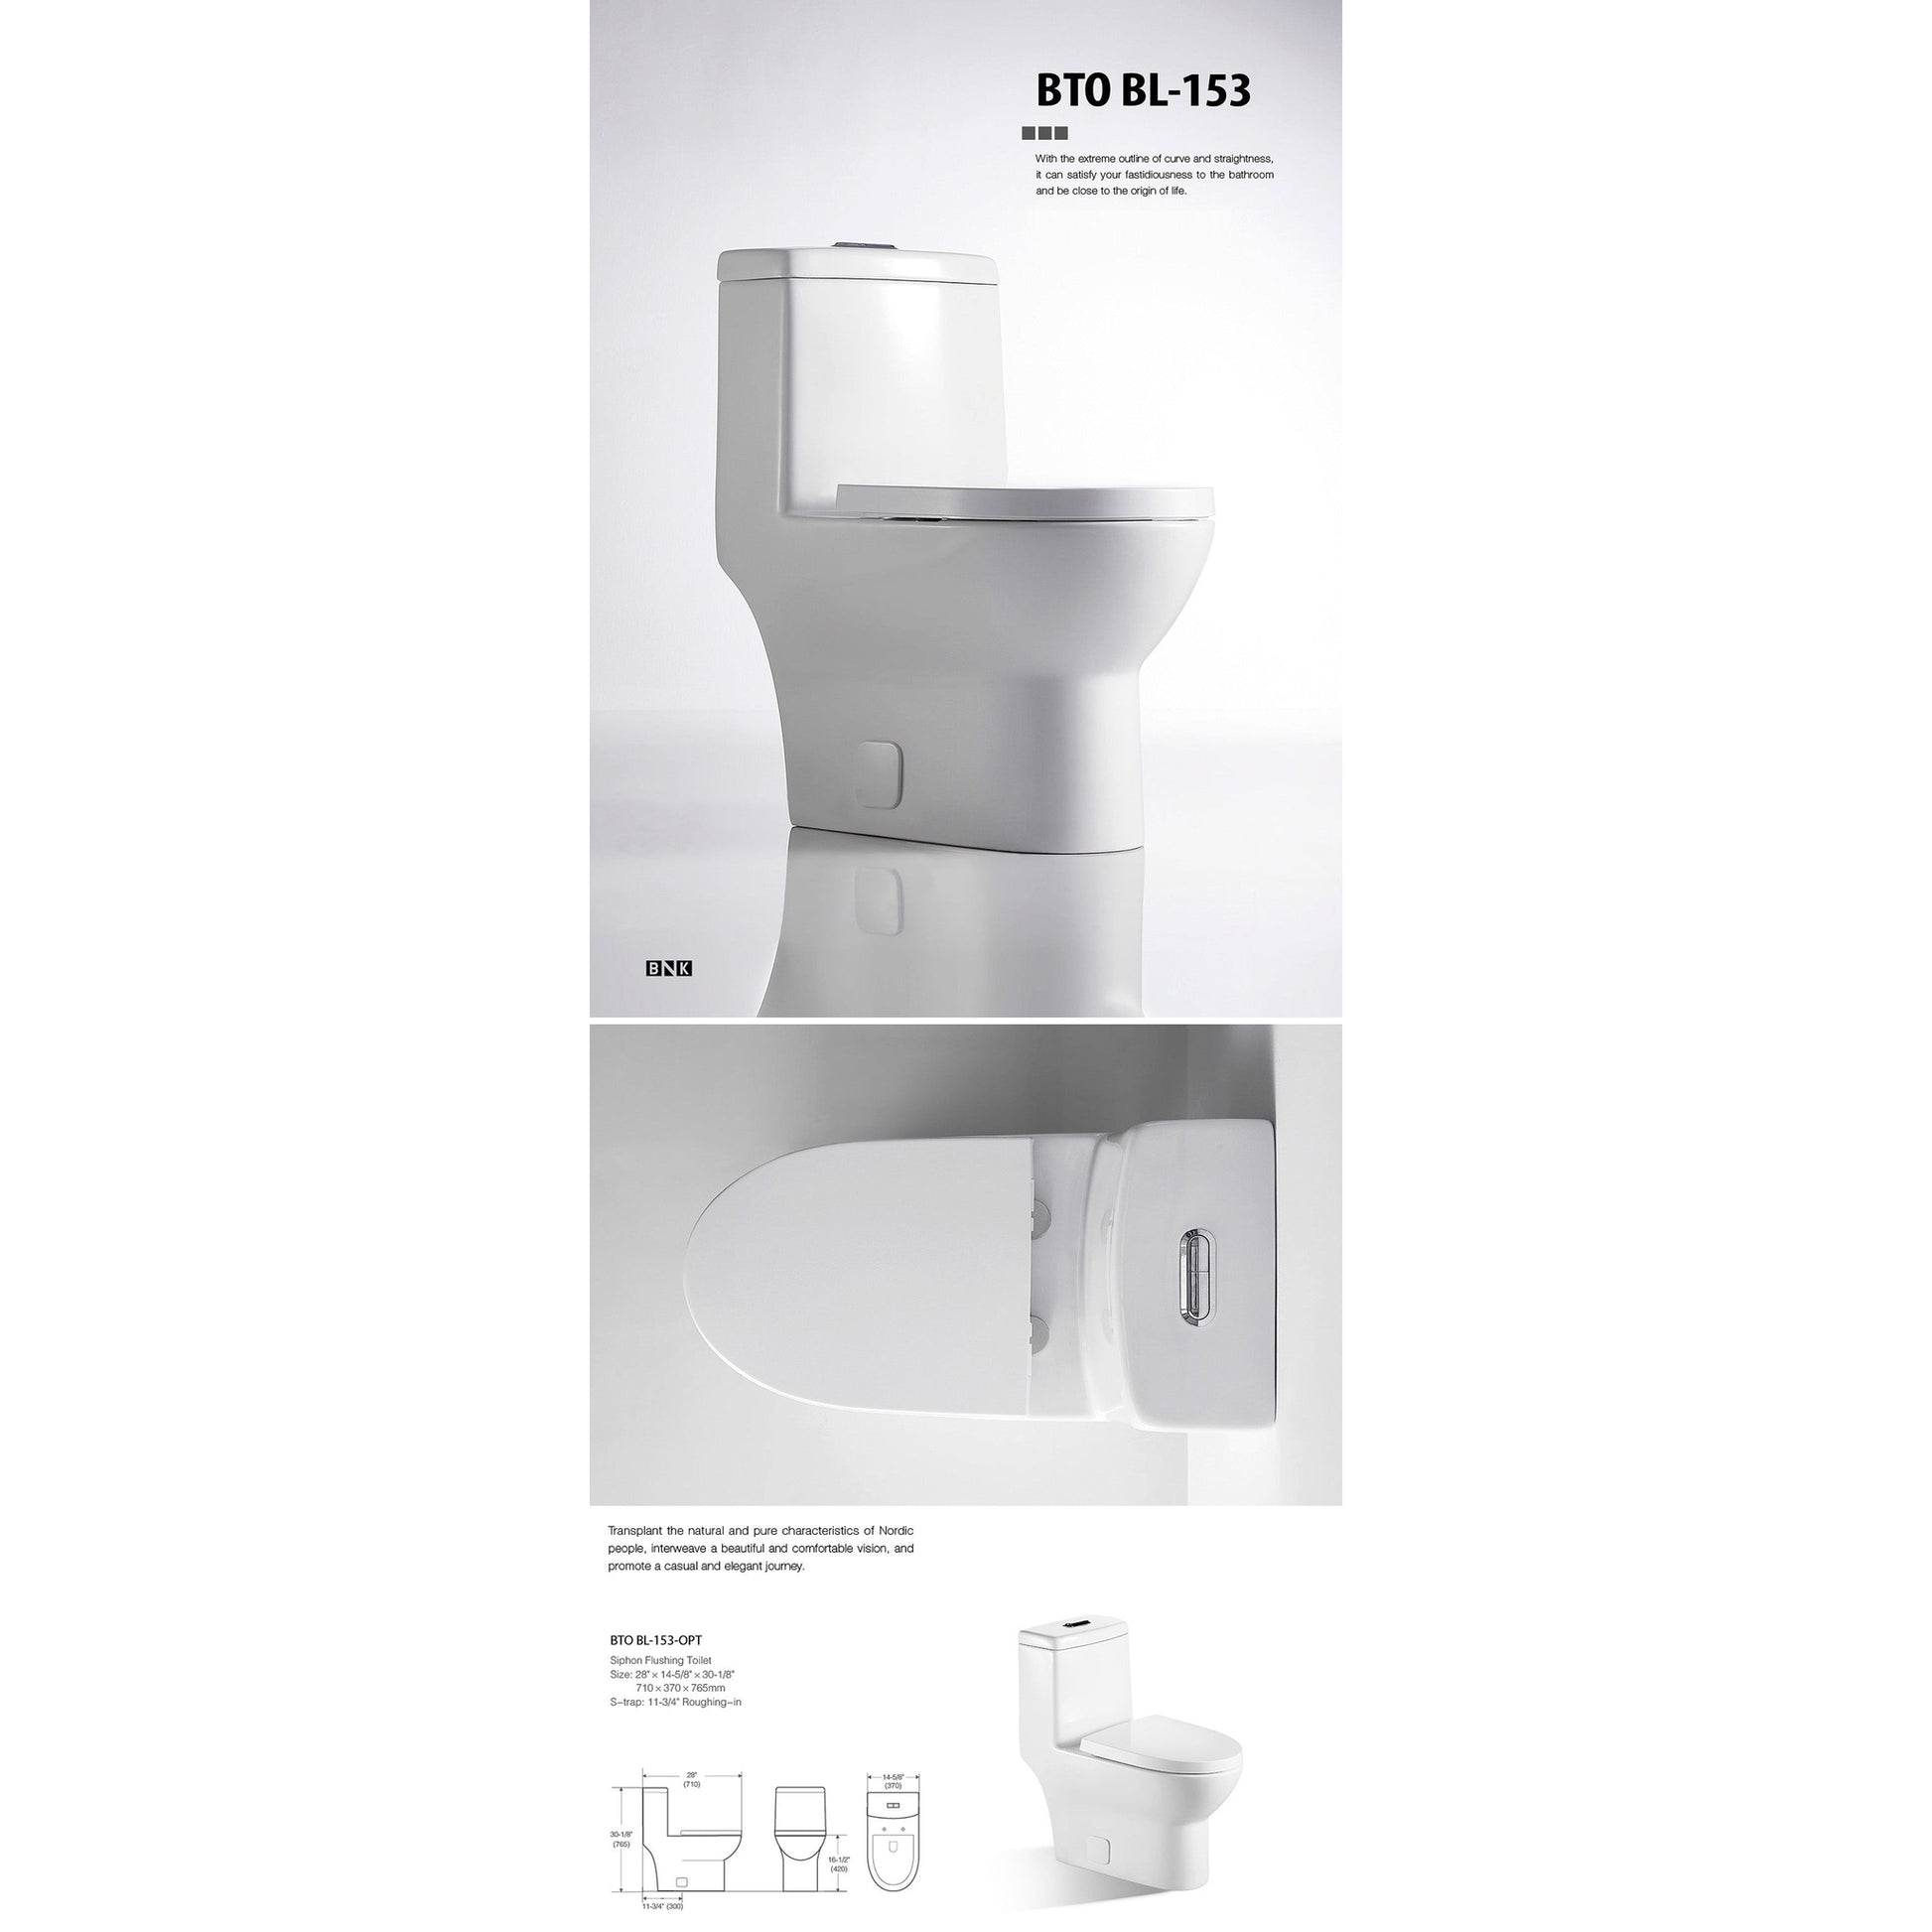 BNK BTO BL-153 Siphon Flushing Toilet